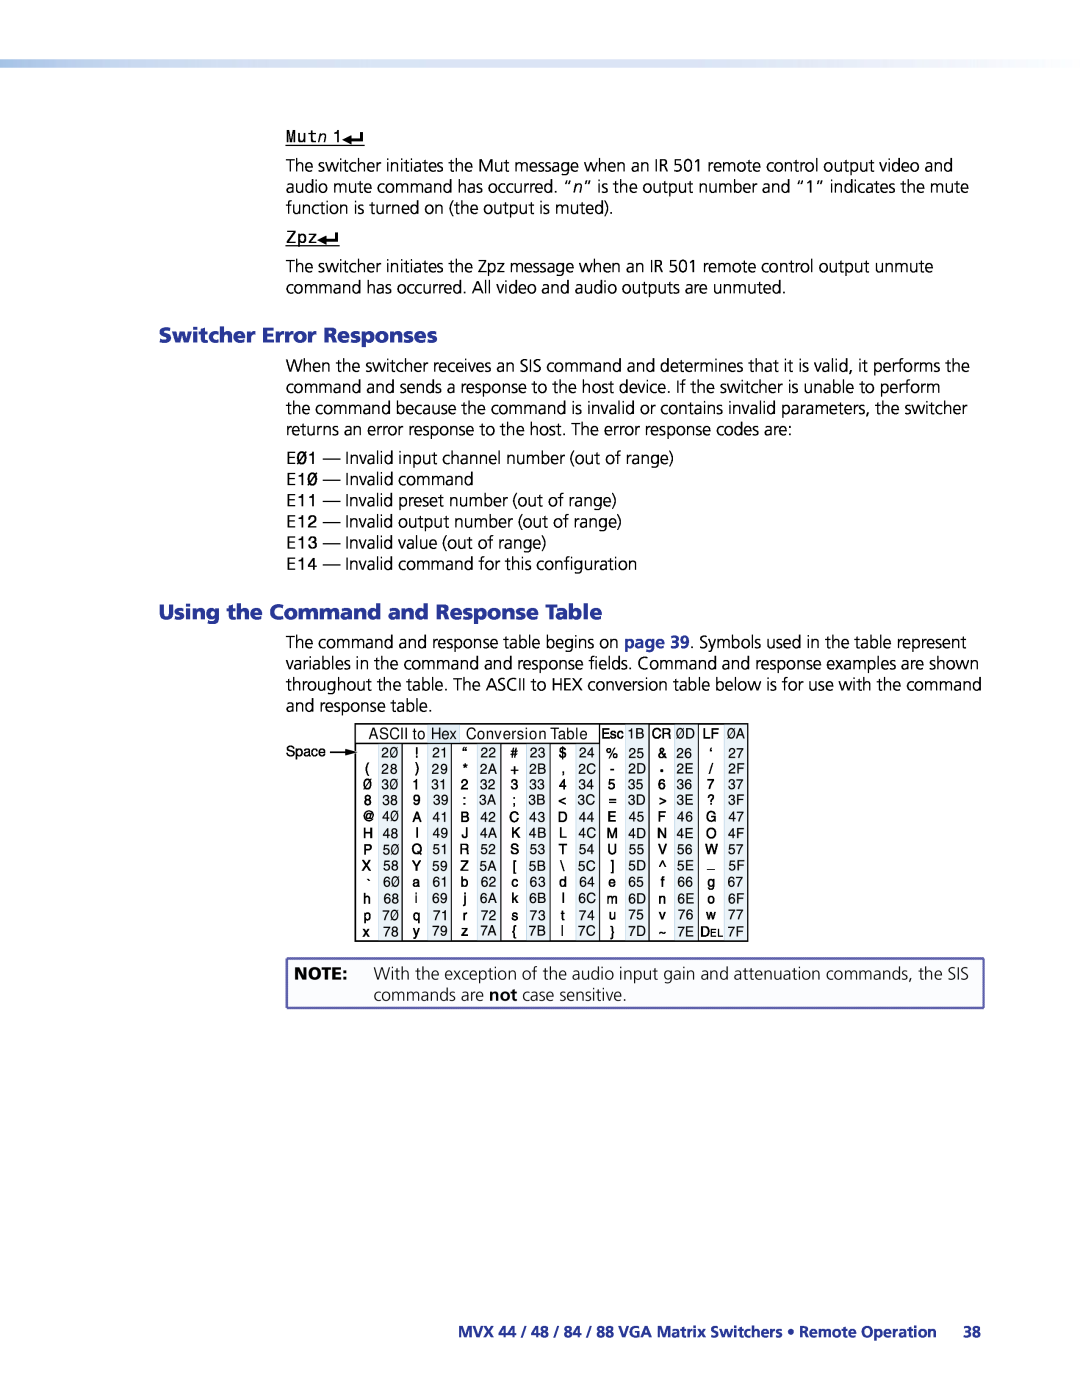 Extron electronic MVX 88, MVX 44, MVX 84, 48 manual Switcher Error Responses, Using the Command and Response Table 